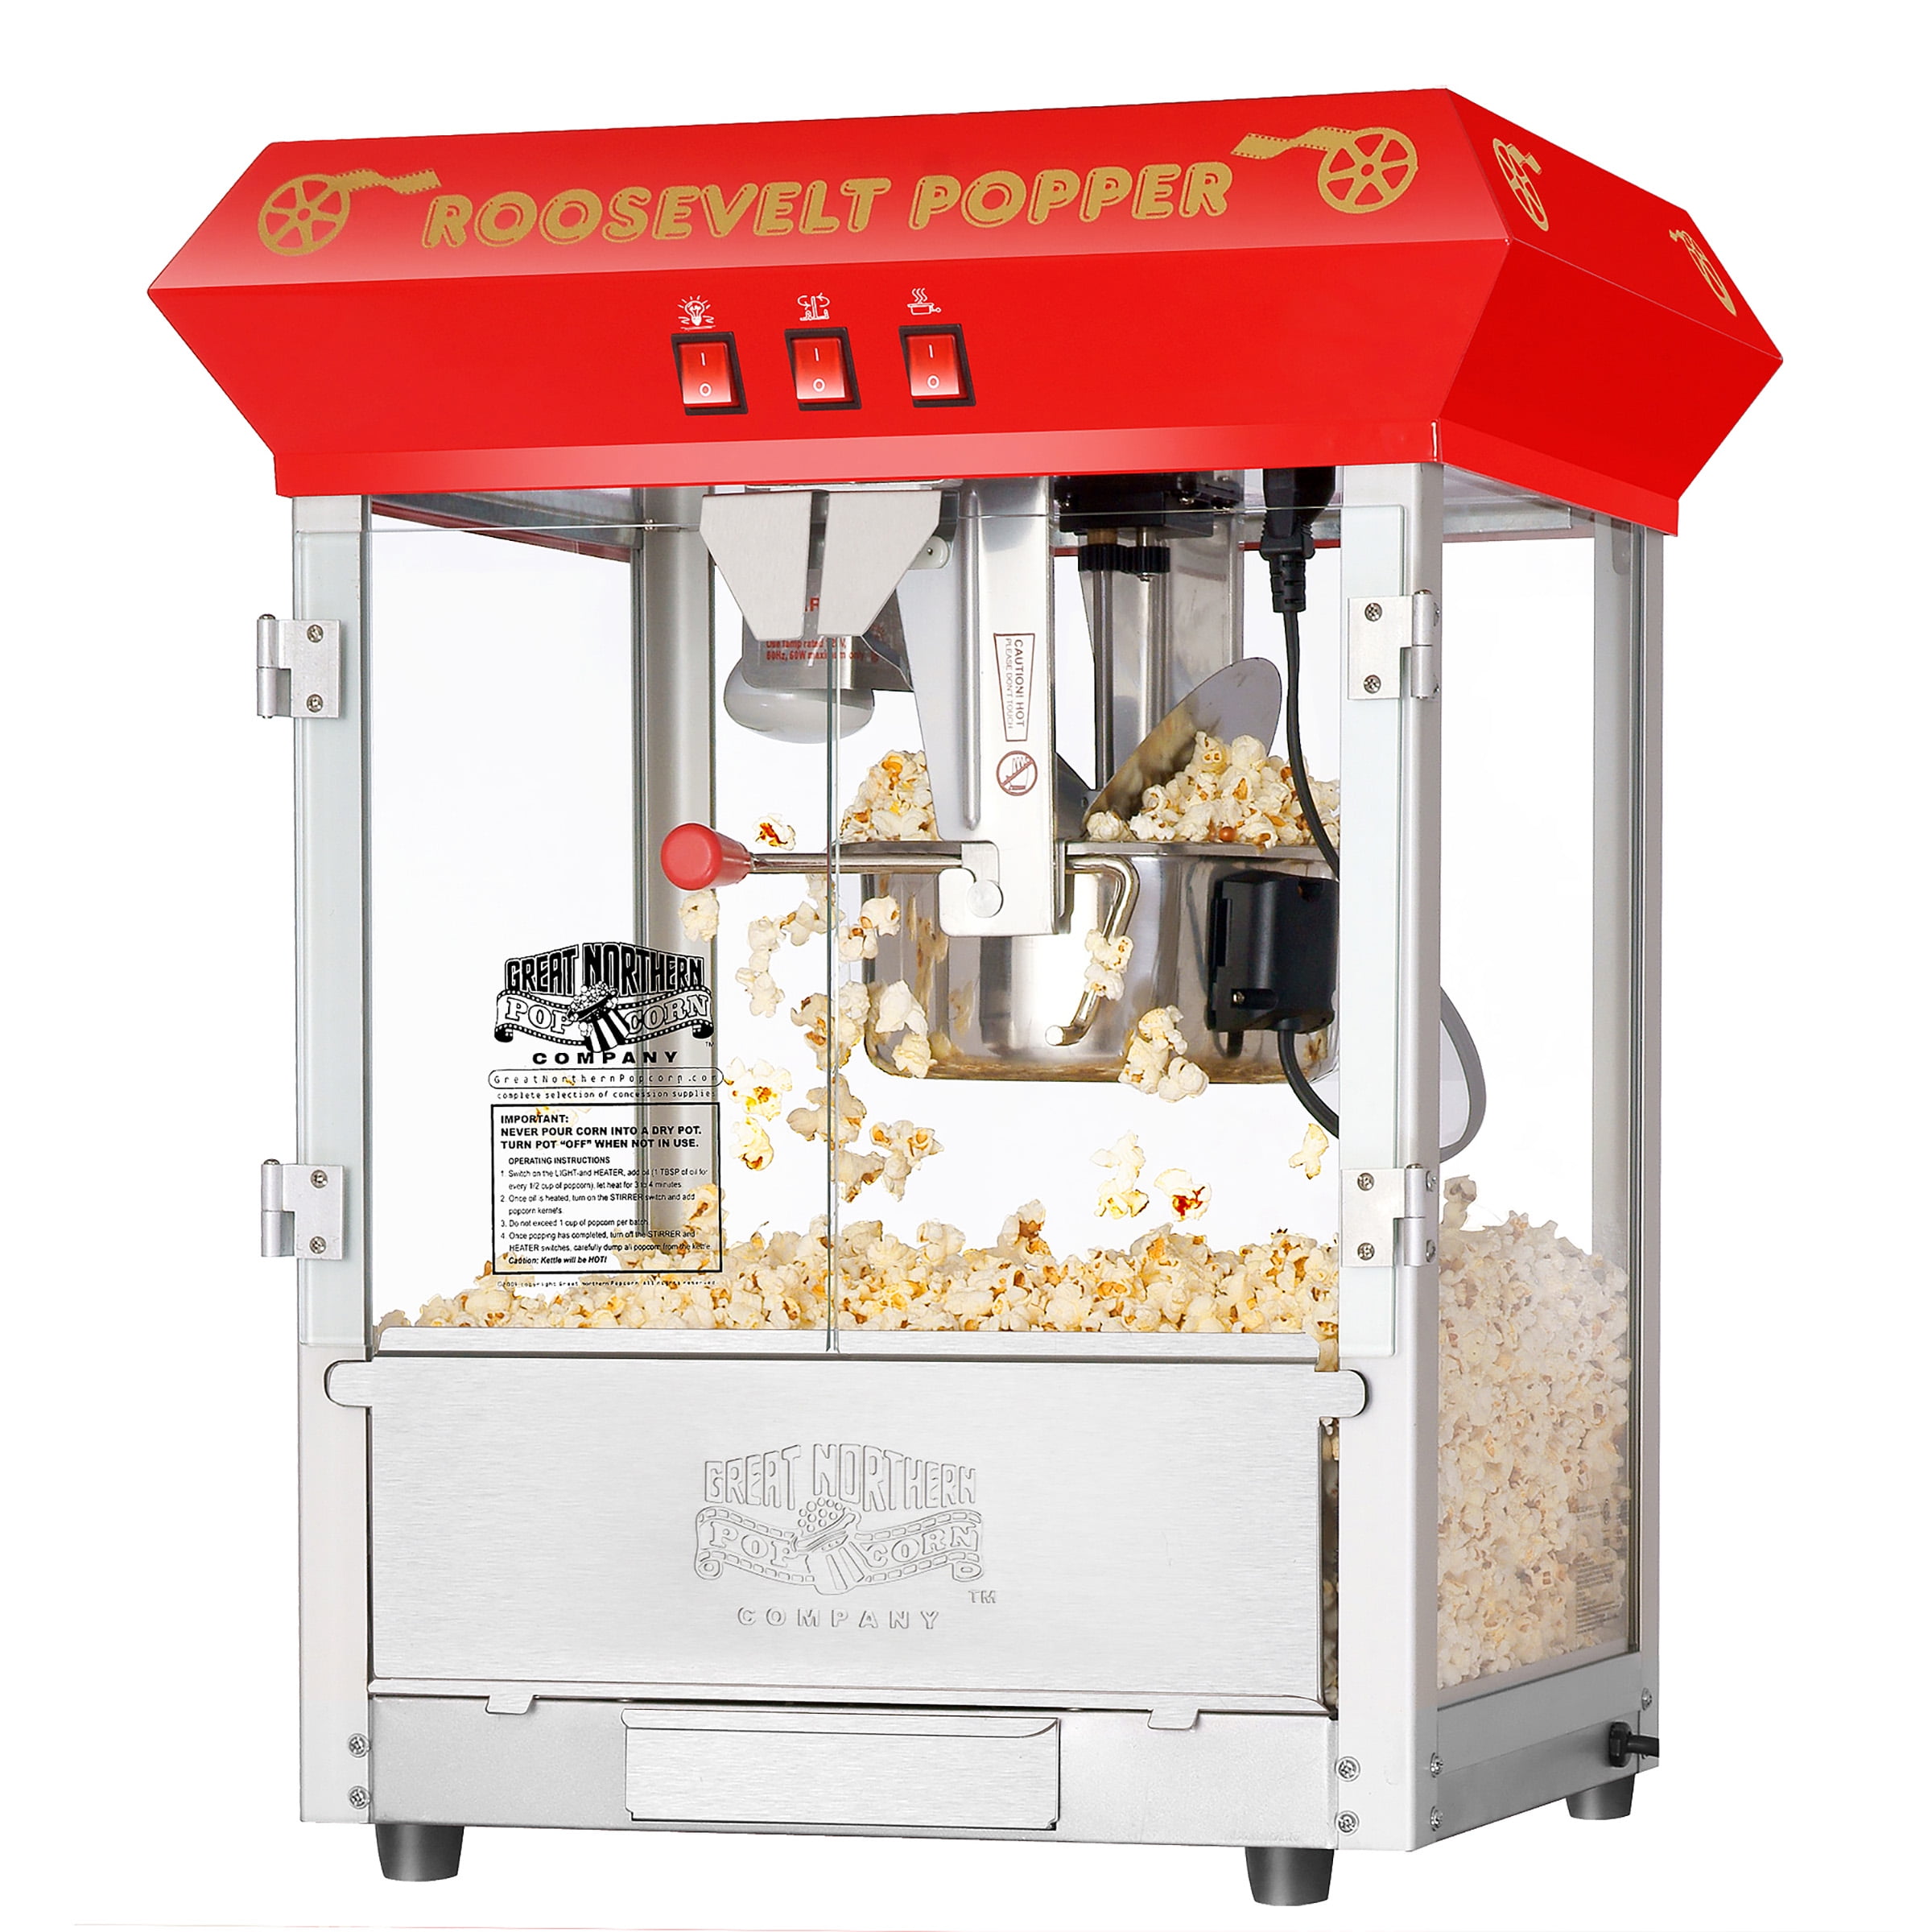 VAVSEA Hot Air Popcorn Popper, Retro Popcorn Maker, 1200W Electric Popcorn  Machine, Oil Free, 3.3lb for Home Party Kids, New, Red